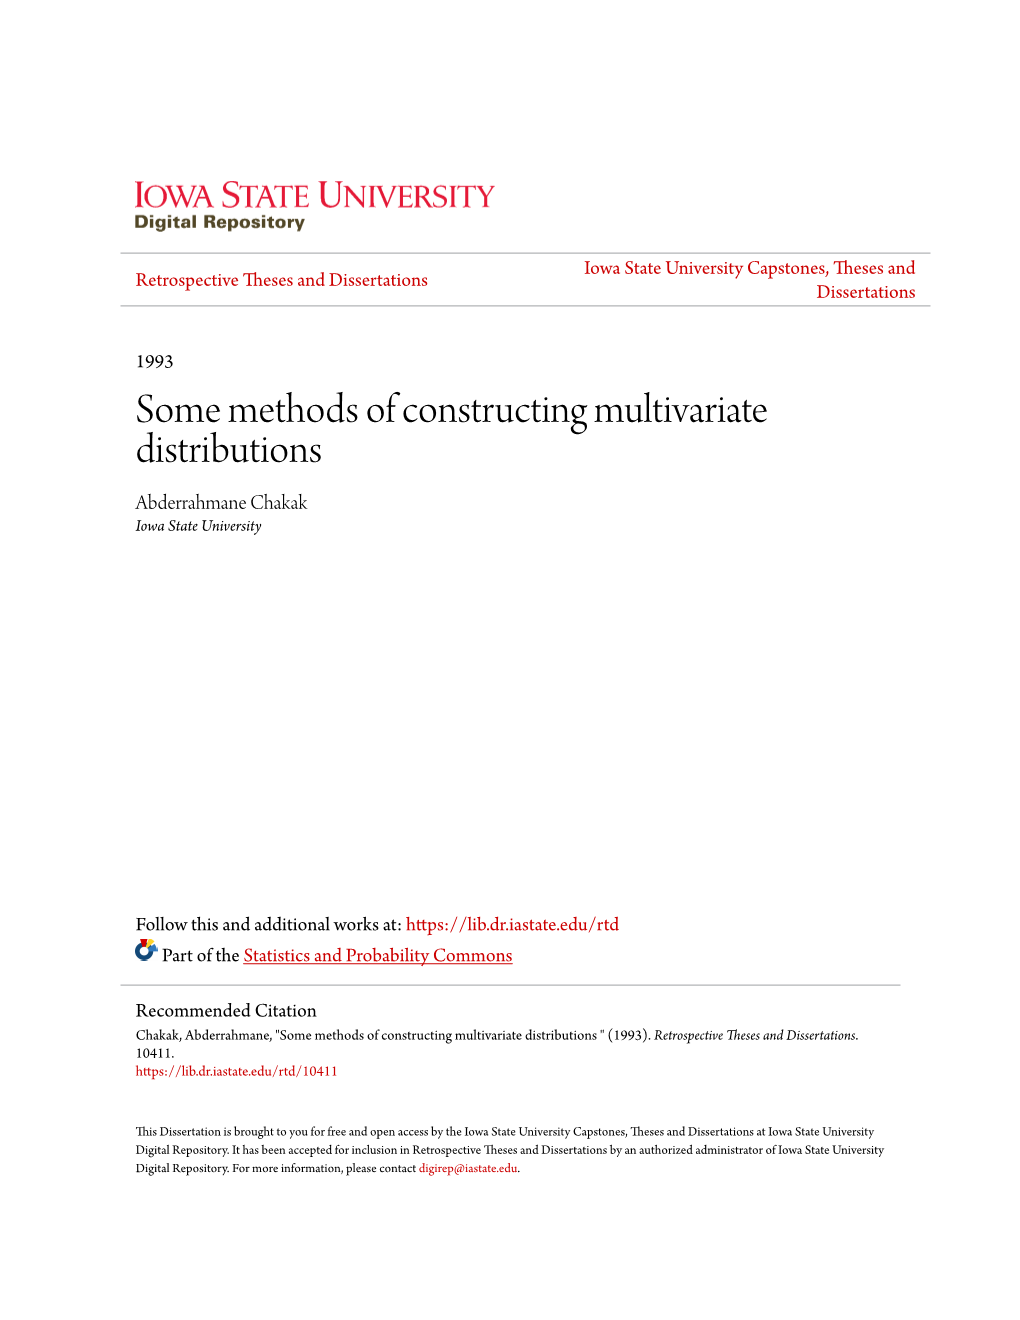 Some Methods of Constructing Multivariate Distributions Abderrahmane Chakak Iowa State University